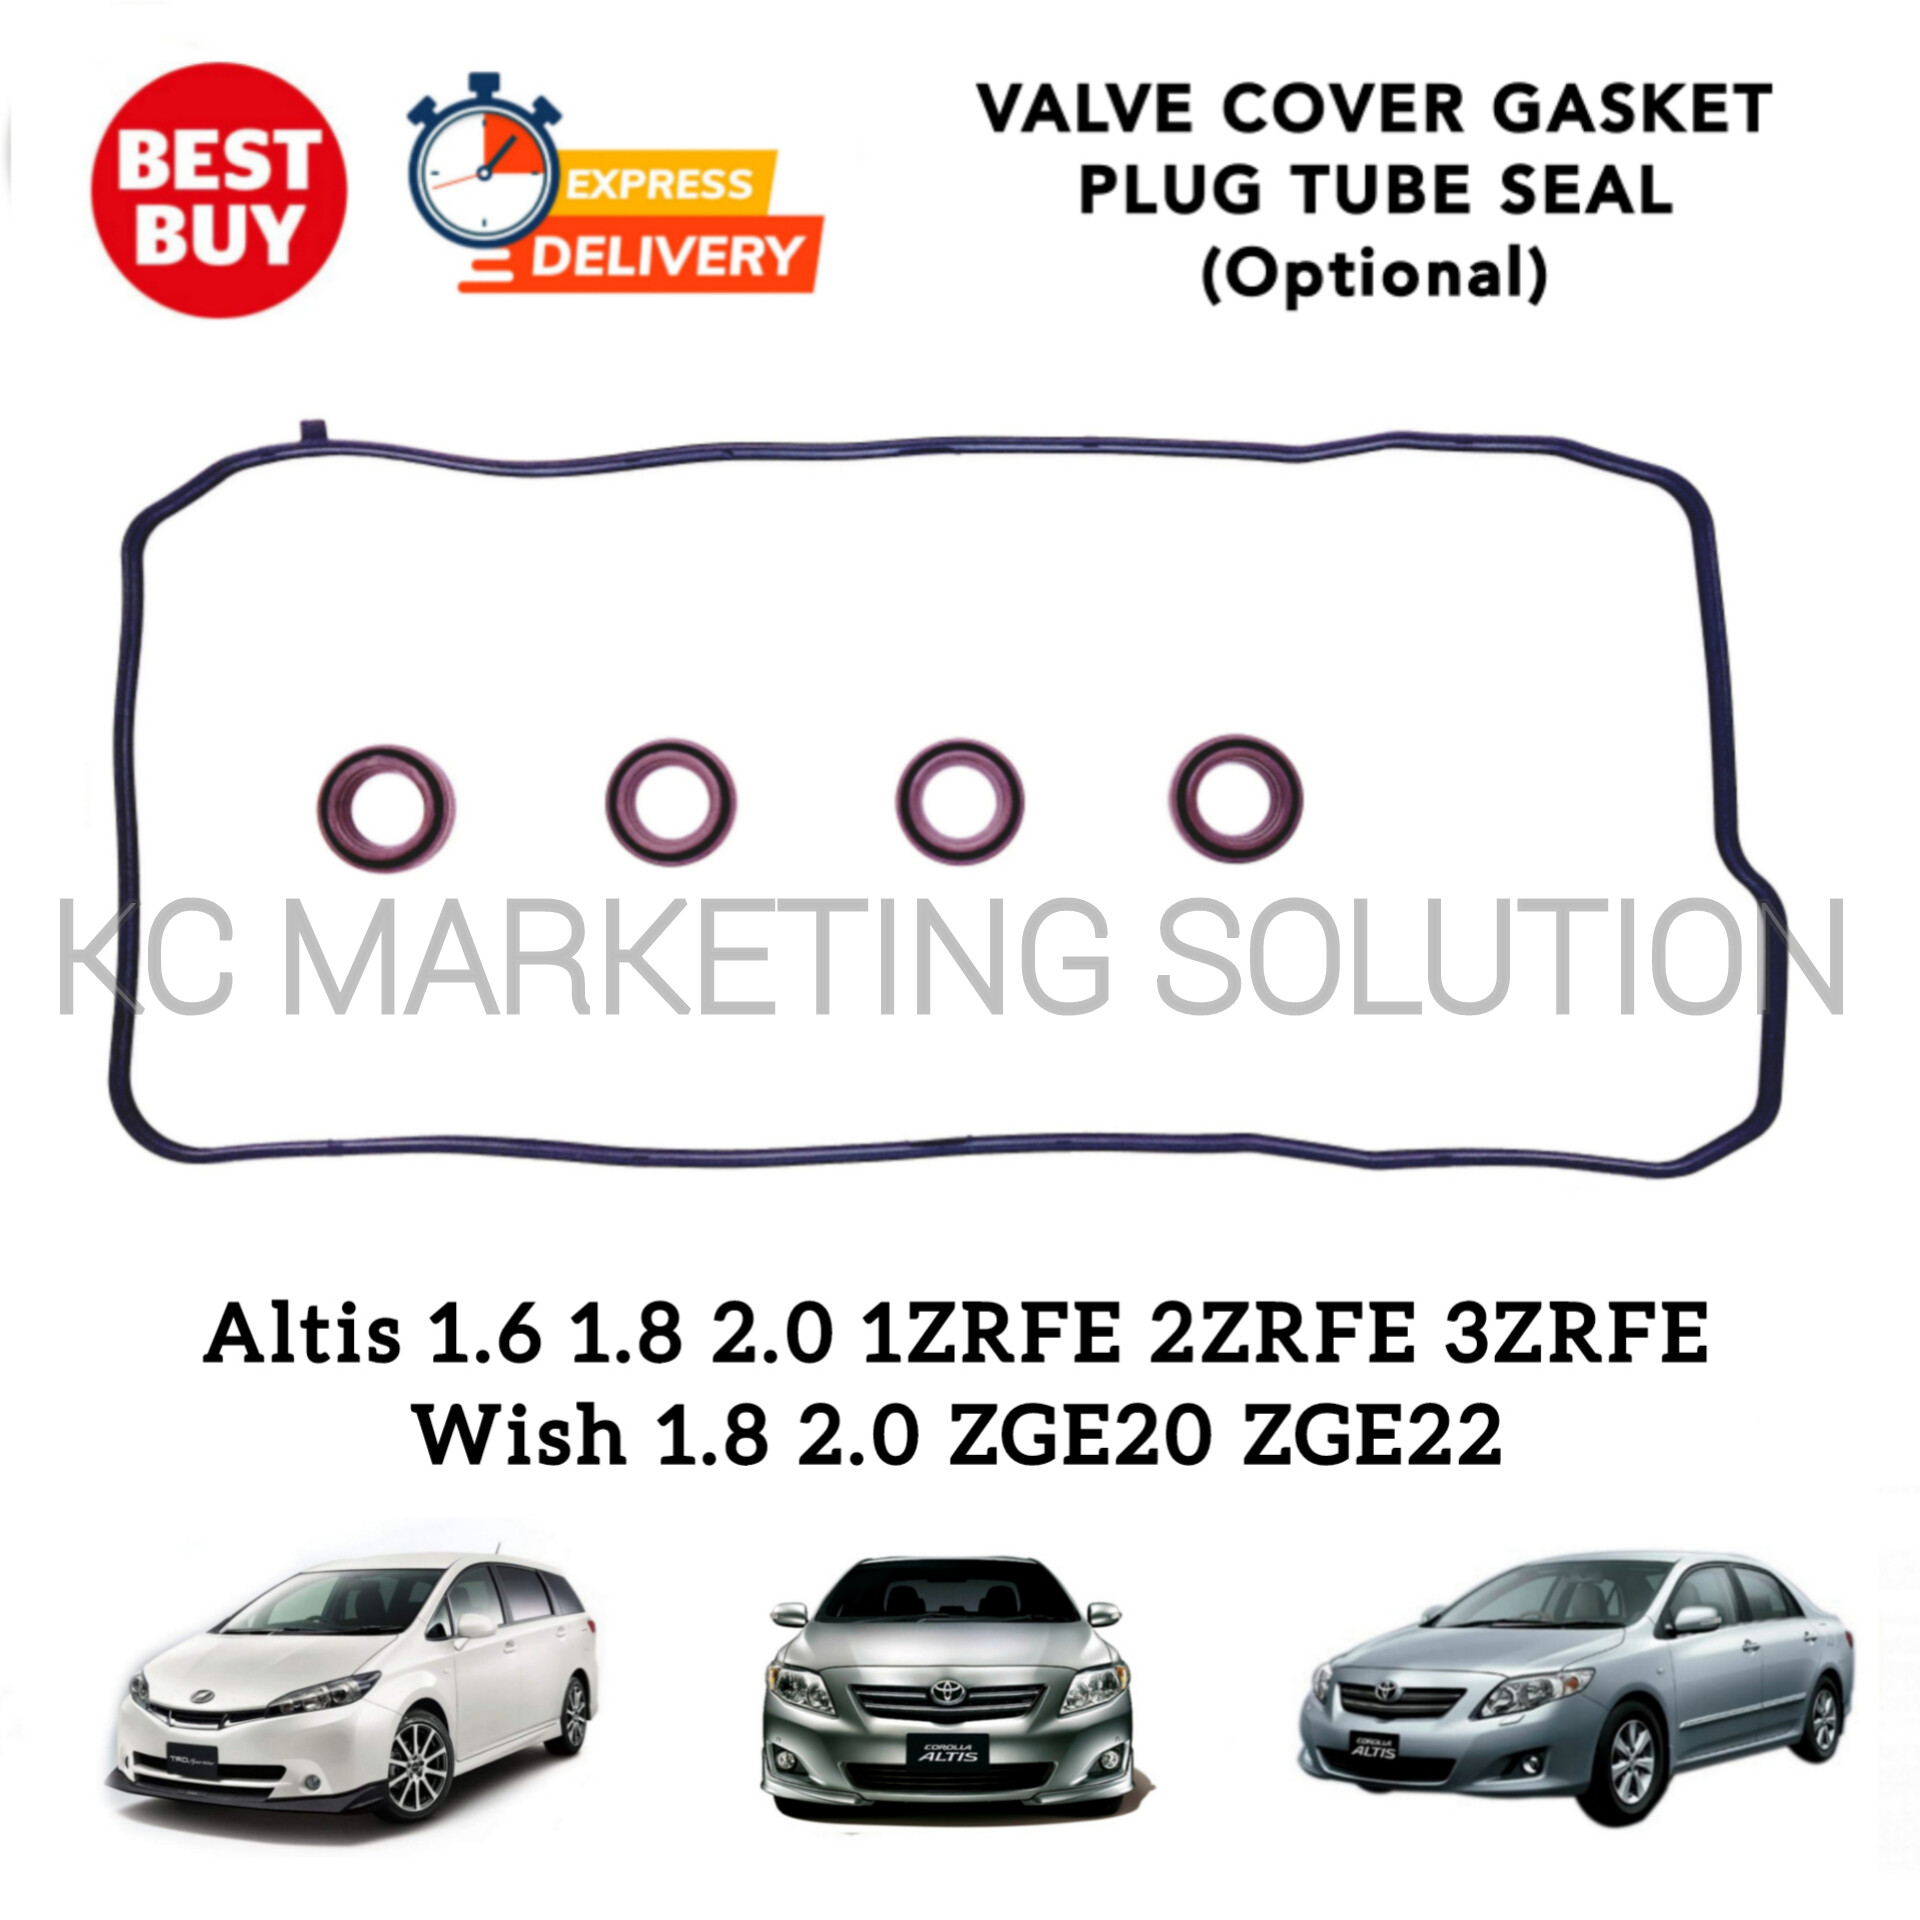 Valve Cover Gasket  Plug Seal Toyota Altis 1.6 1.8 2.0 ZRE141 142 172  173 Toyota Wish 1.8 2.0 ZGE20 22 Lazada